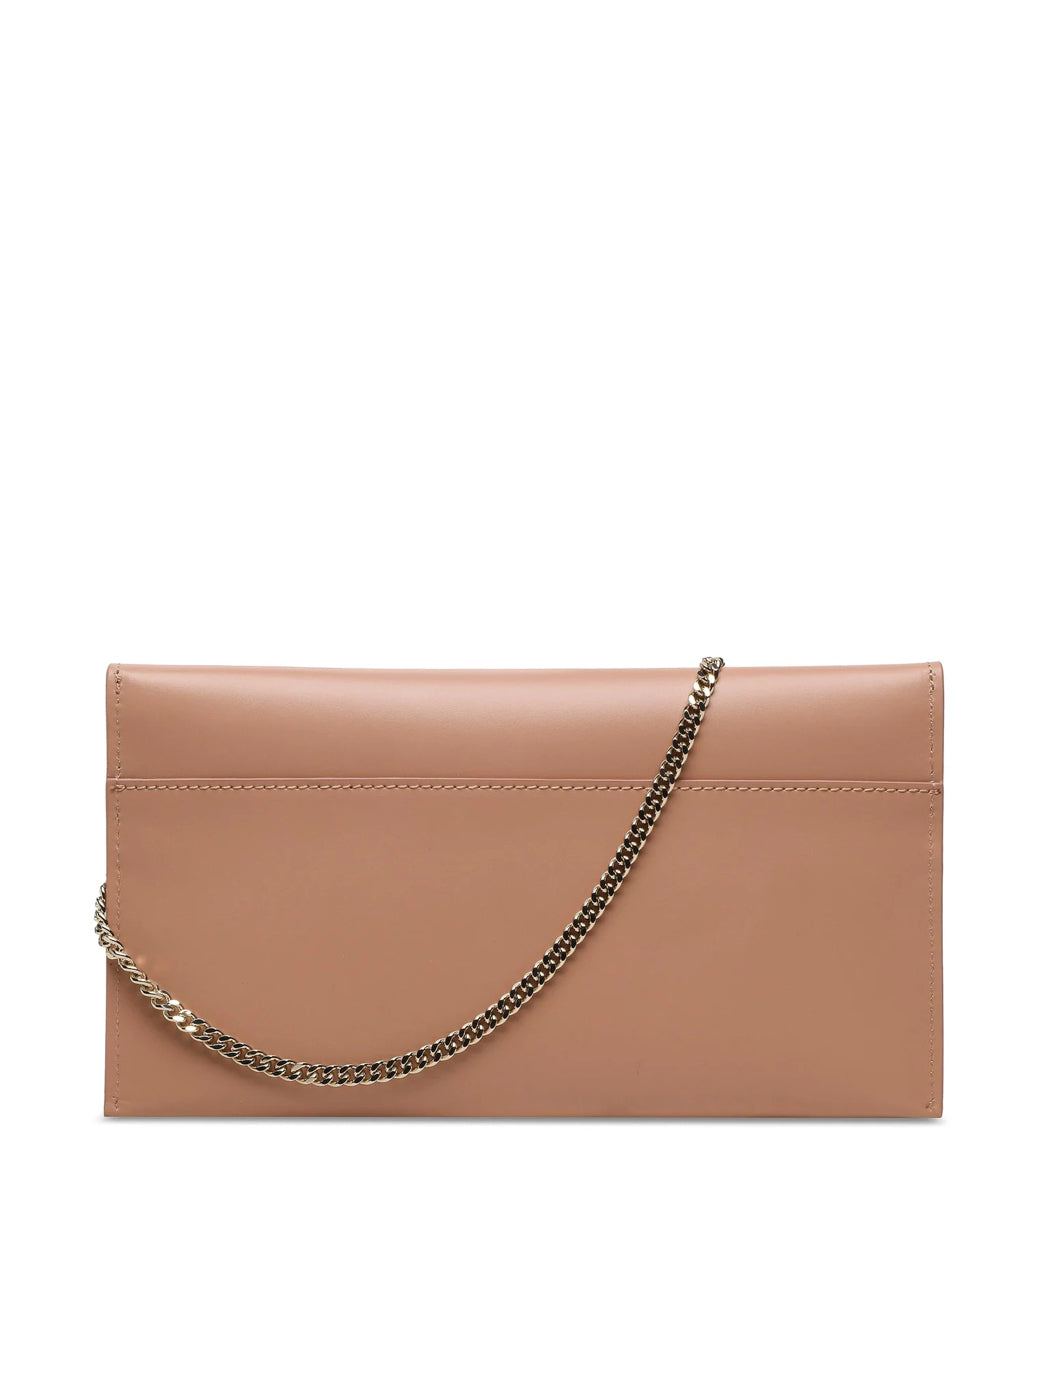 Patrizia Pepe Tan Handbag  - Leather